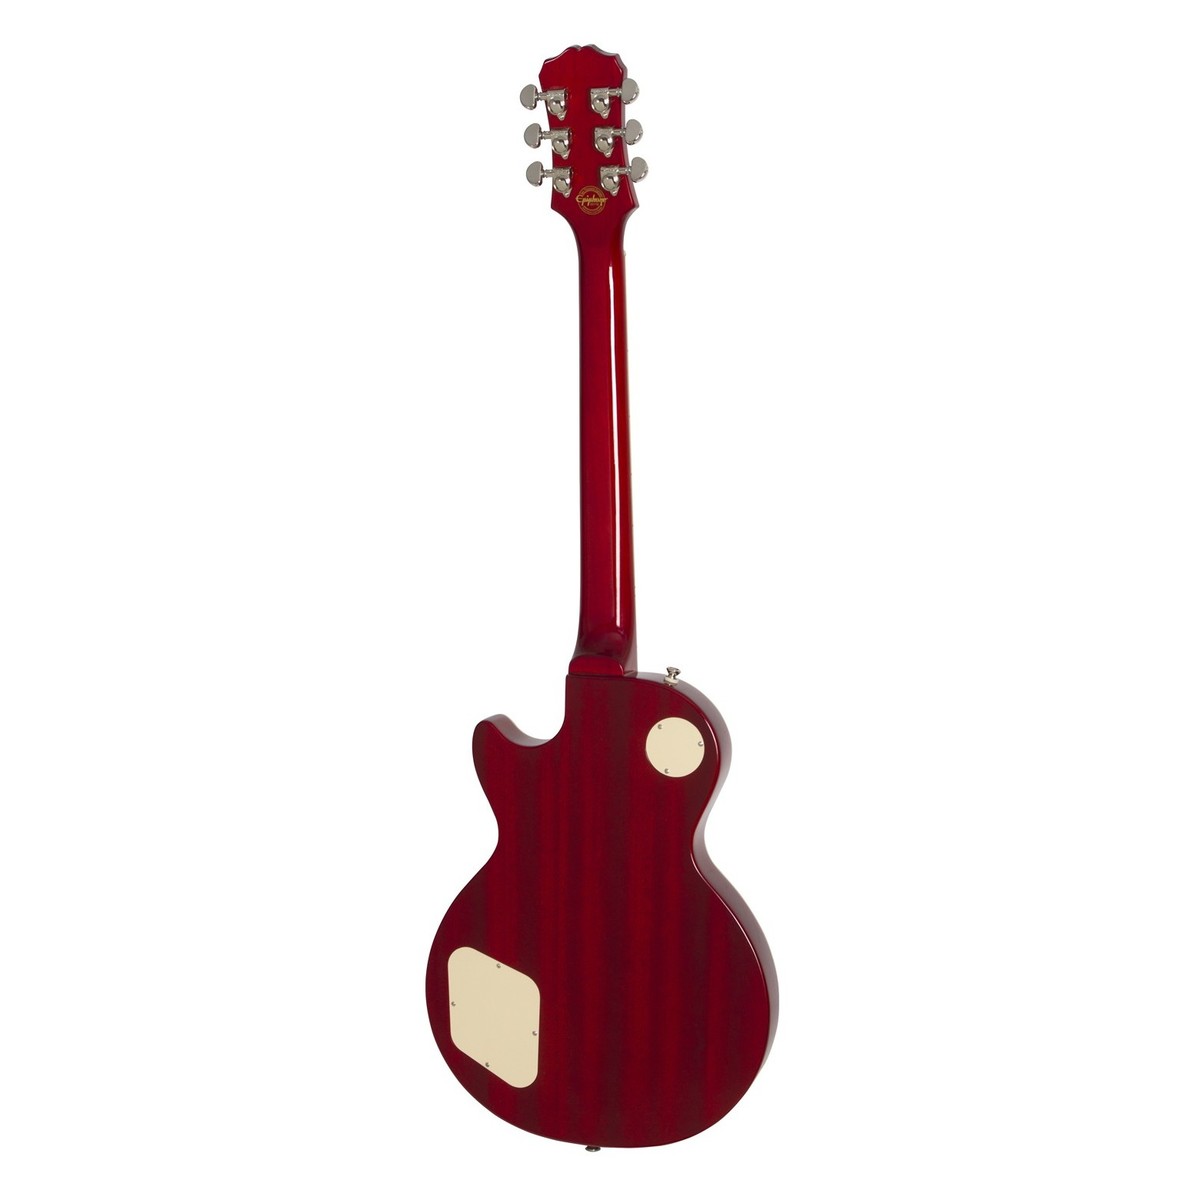 Epiphone Les Paul Standard Hh Ht Pf - Faded Cherry Sunburst - Single cut electric guitar - Variation 1